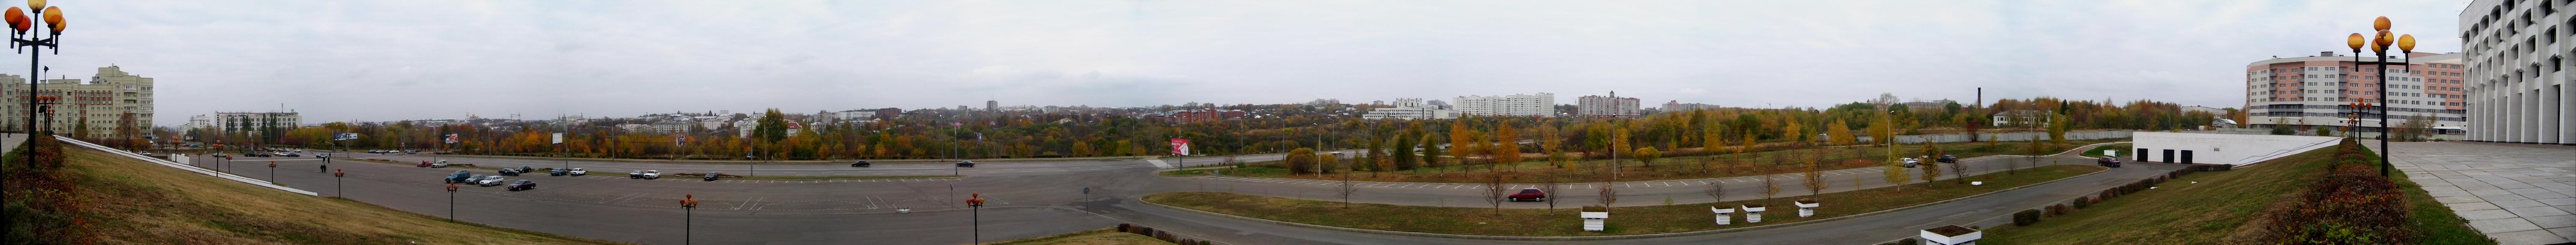 Вид от здания Администрации области (Белого дома)